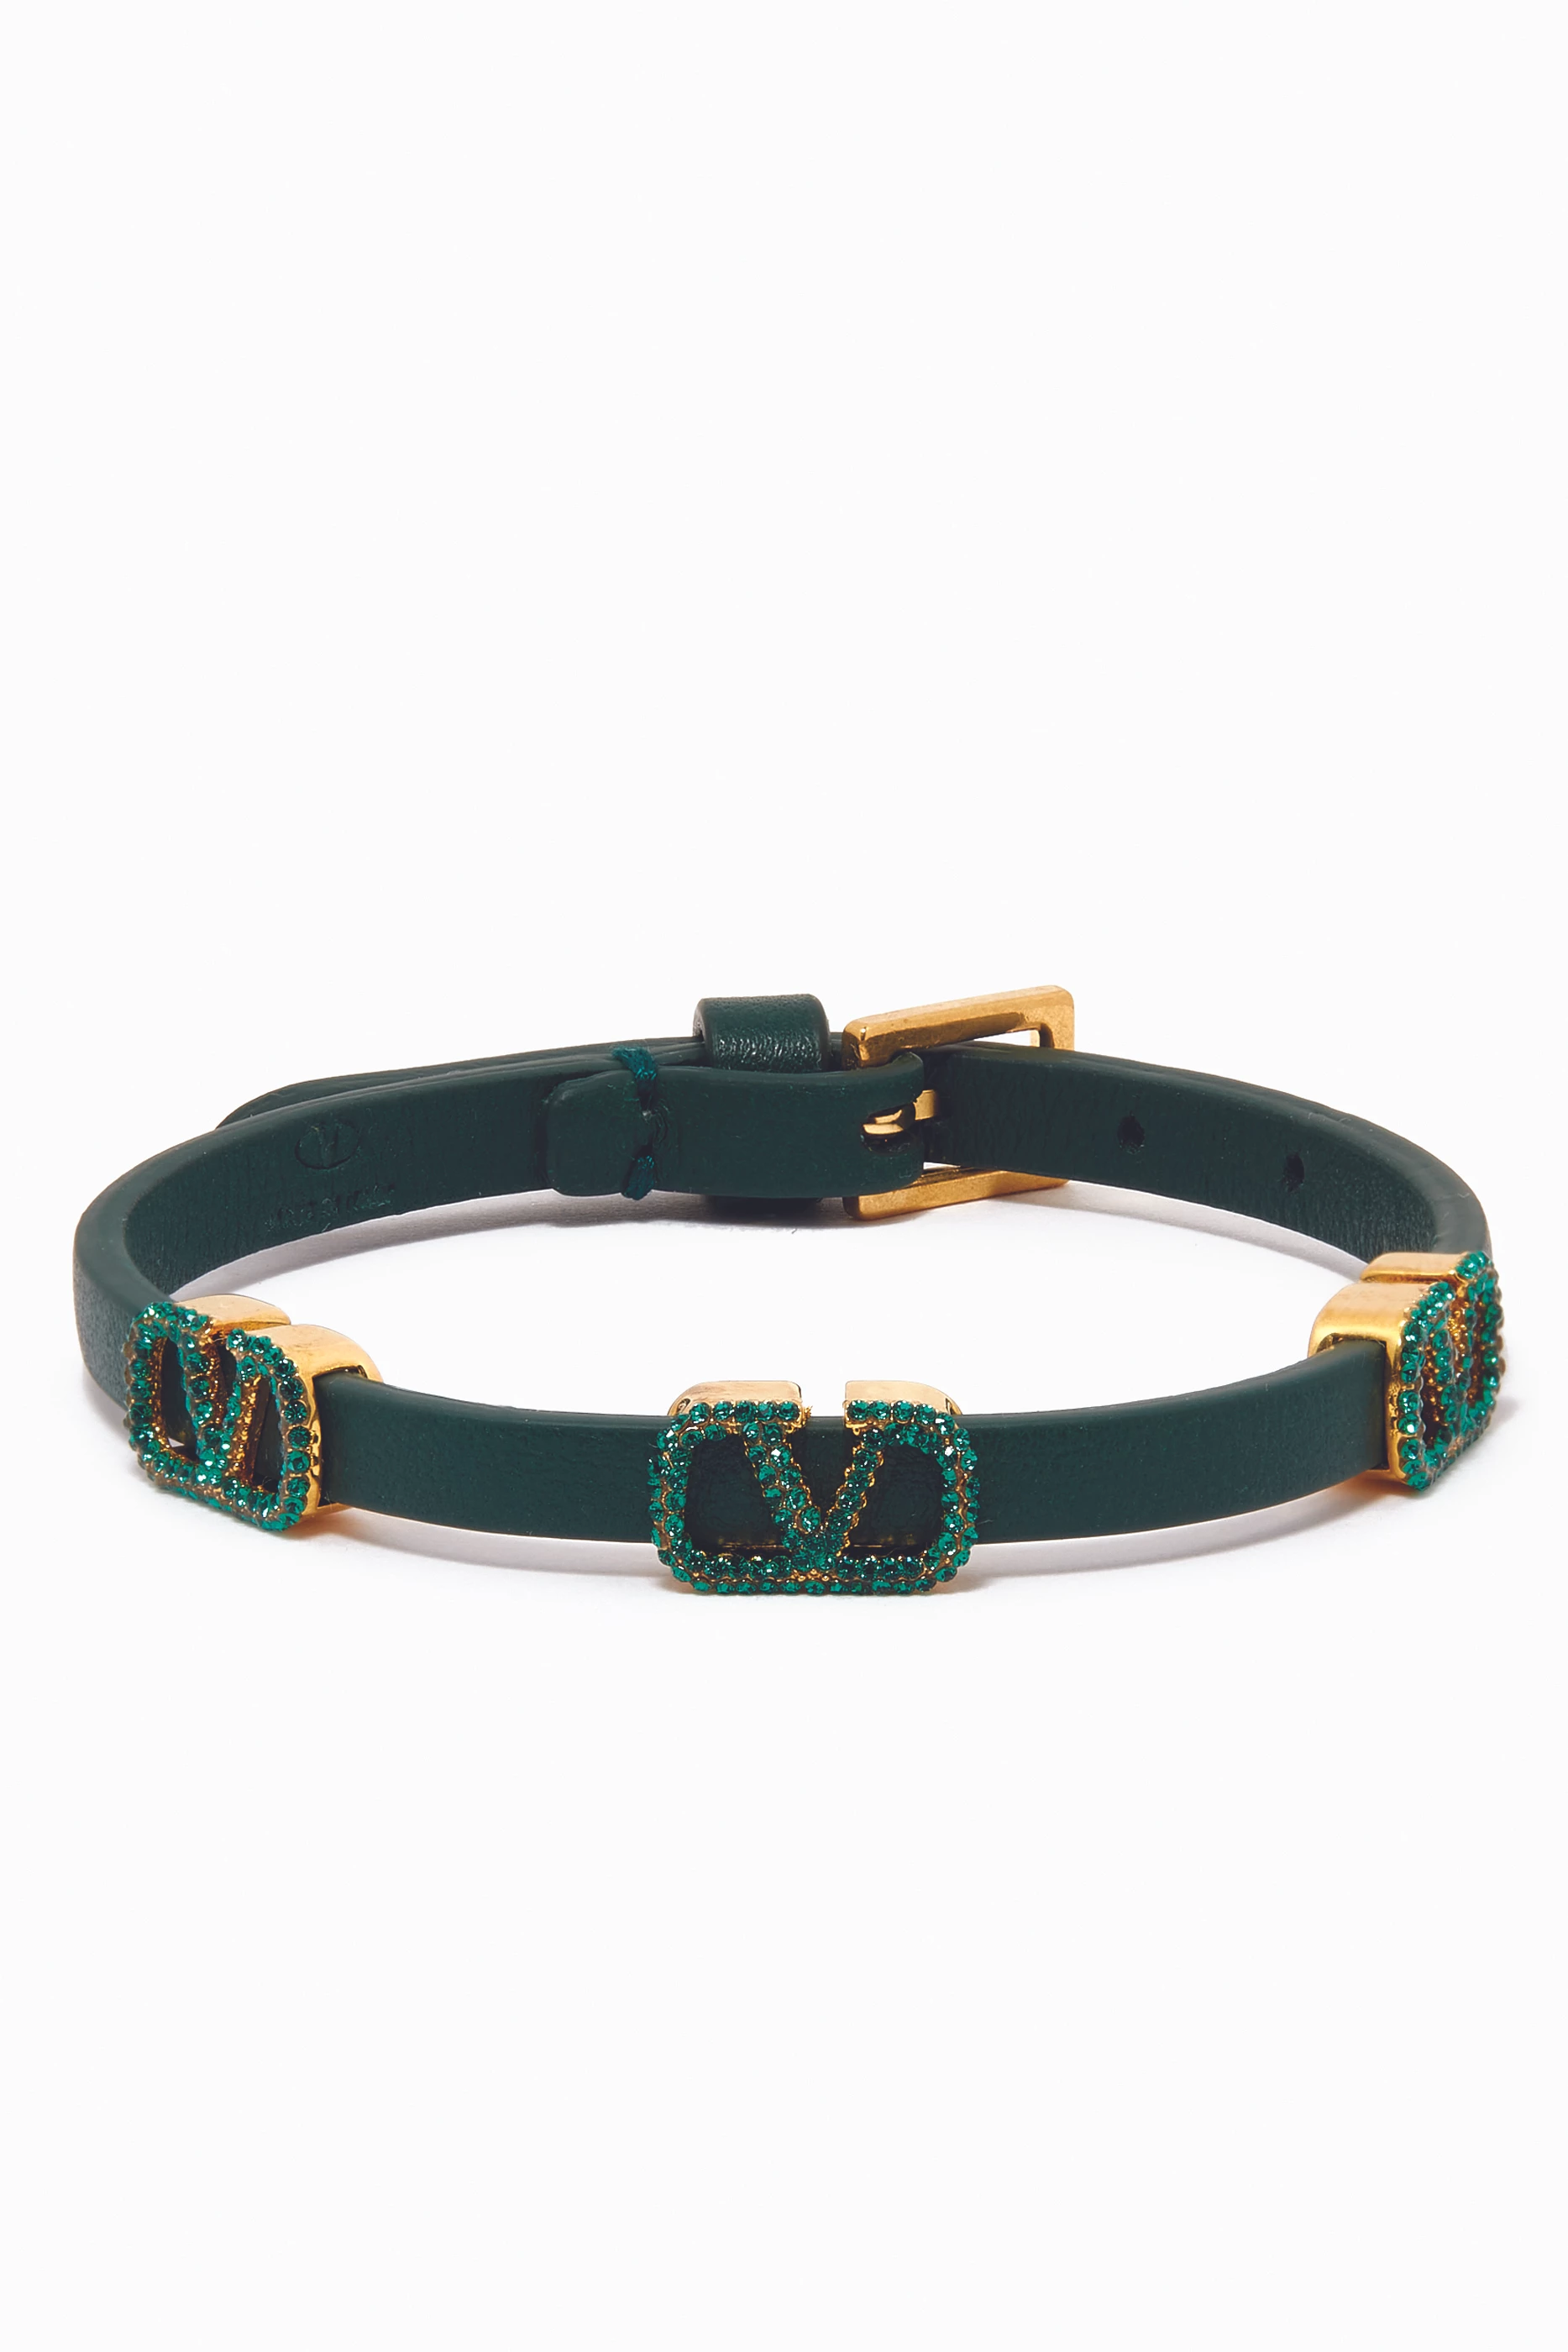 Valentino Garavani Green Vlogo Leather Bracelet